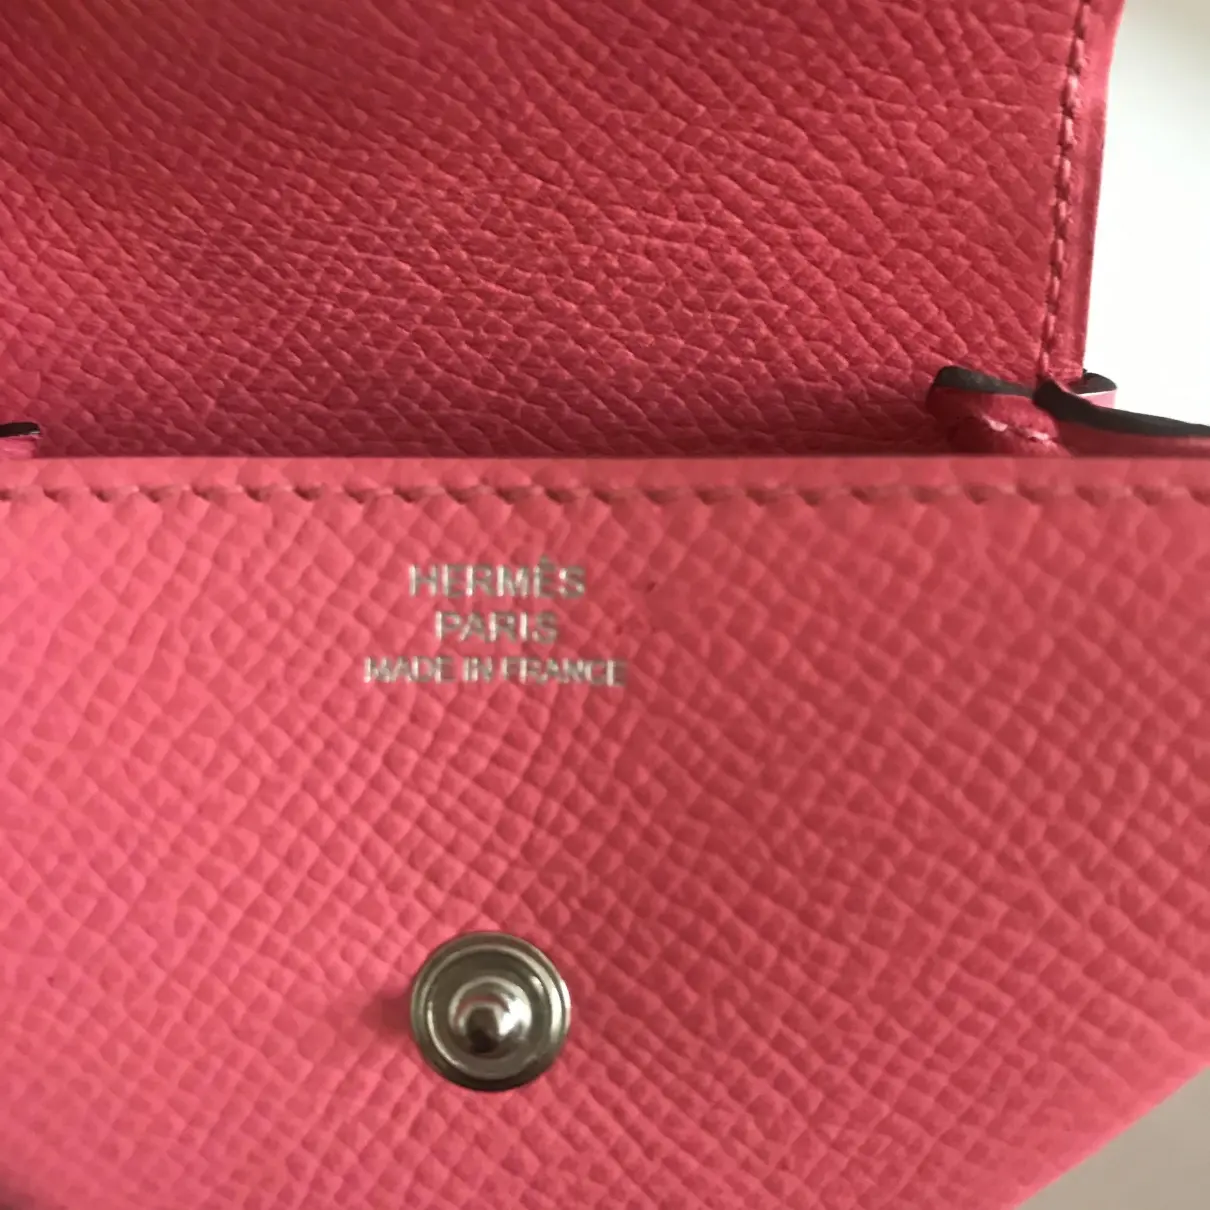 Buy Hermès 24 leather purse online